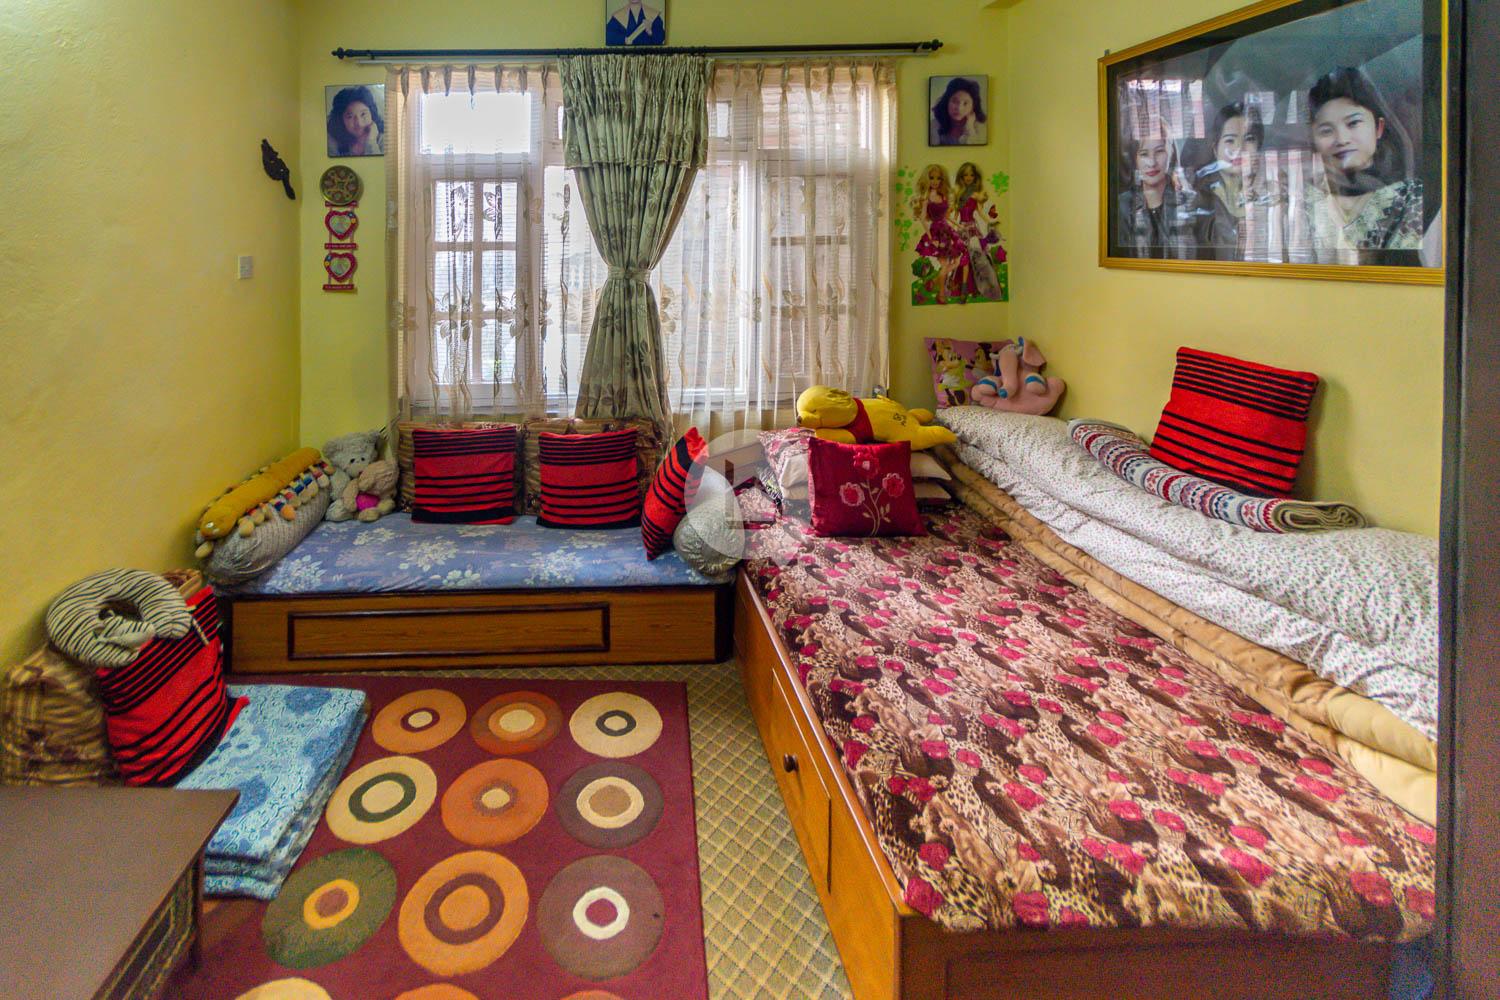 Residential House sale : House for Sale in Sukedhara, Kathmandu Image 8